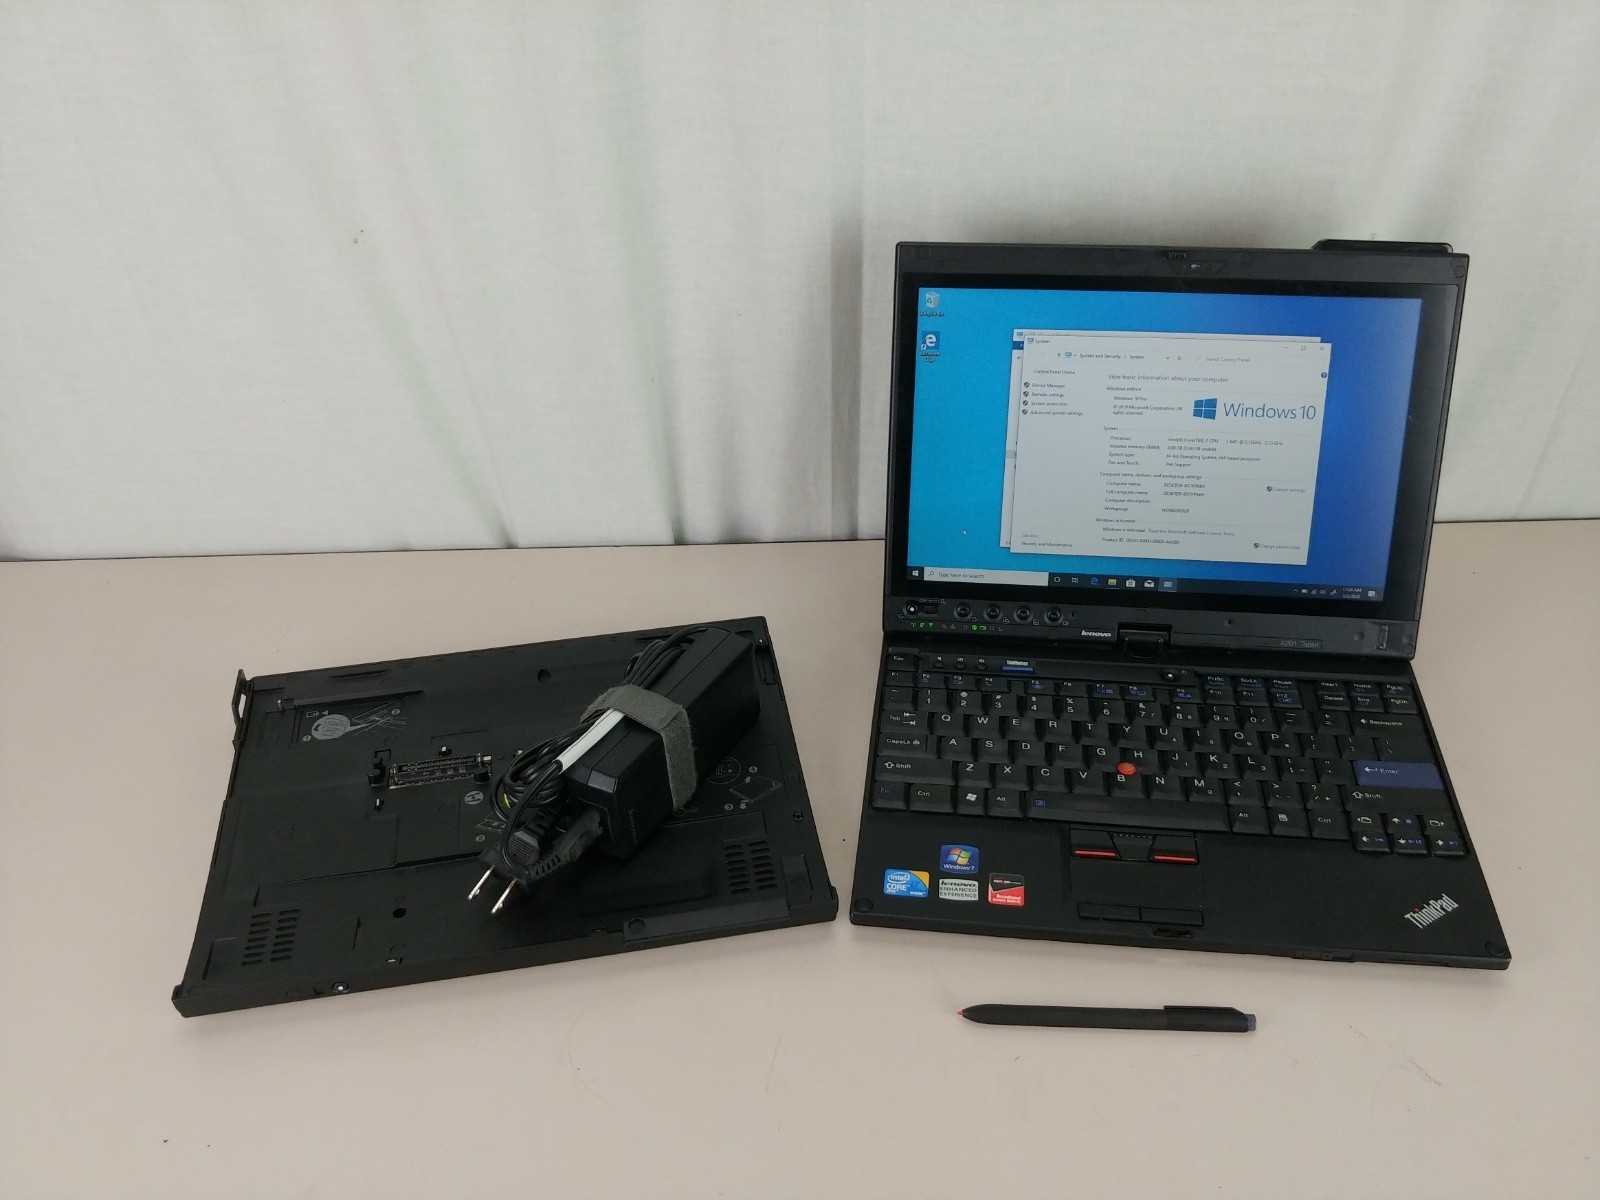 Lenovo ThinkPad x201 Tablet PC i7 2.13GHz 4GB 120GB SSD Windows 10